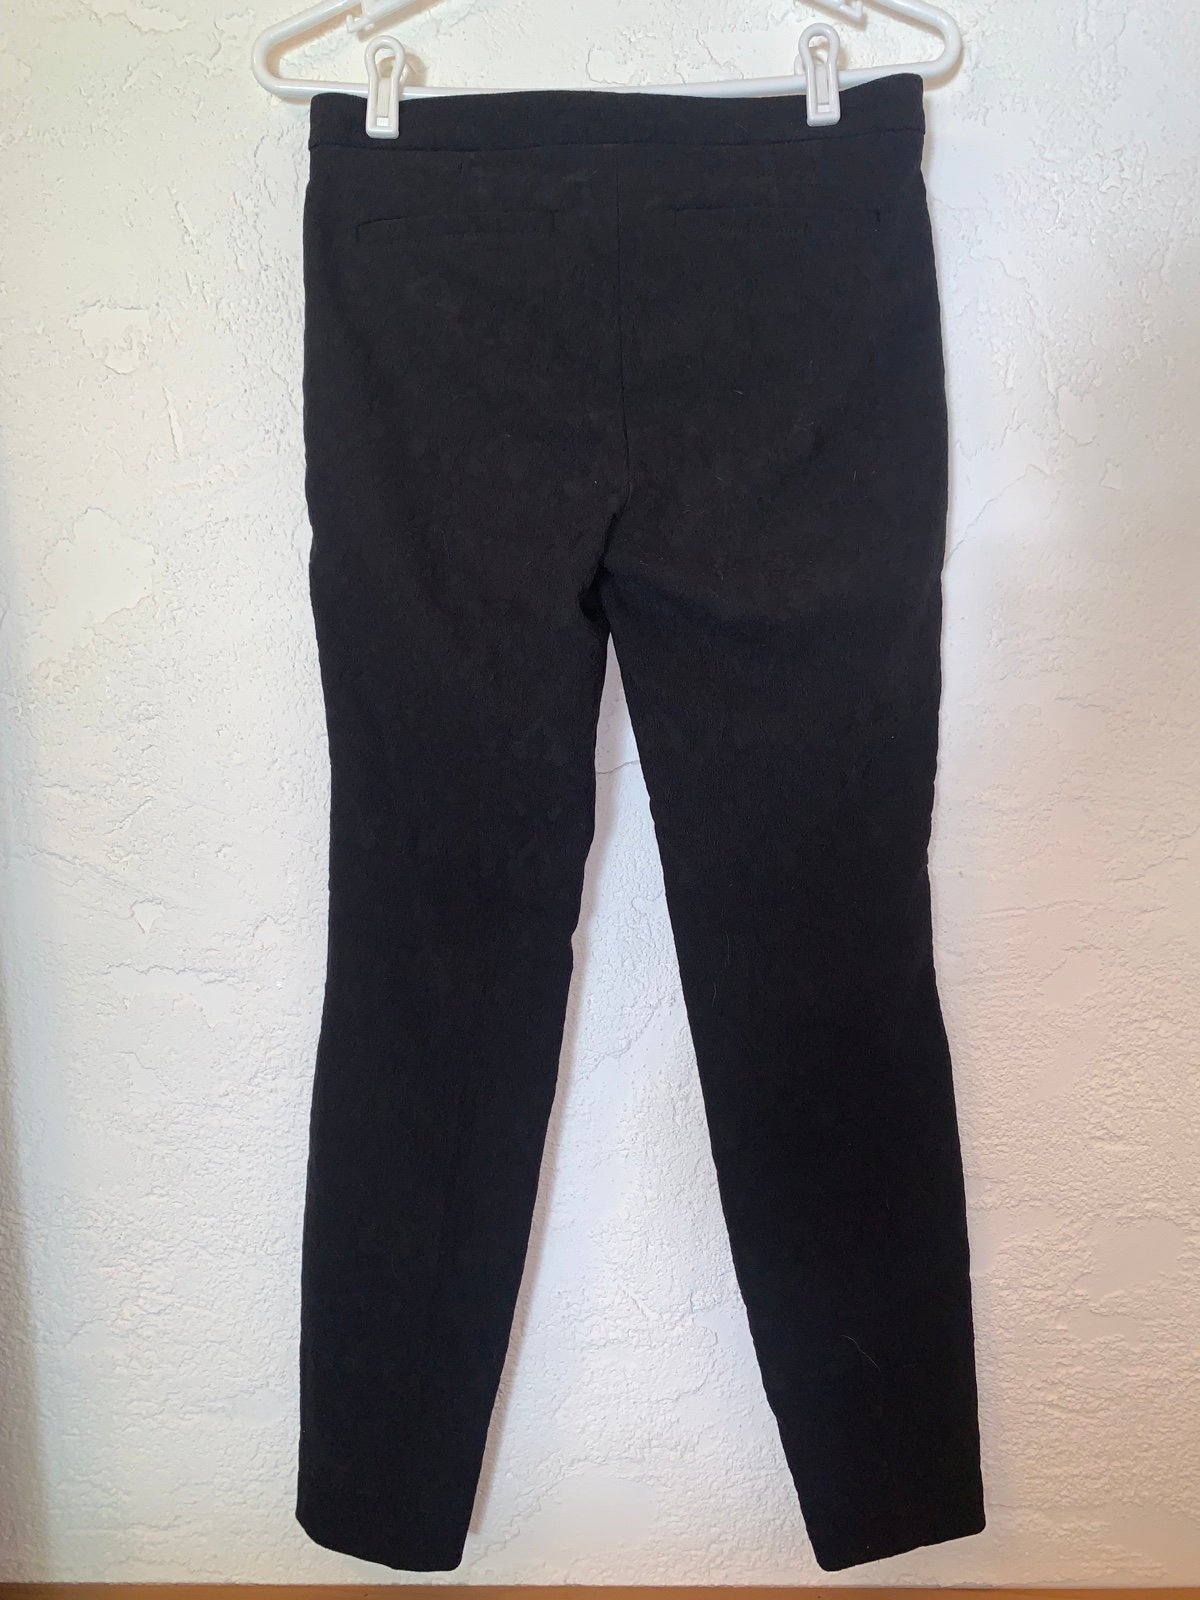 Fashion Kenar black textured dress pants trousers size 0 pLc8H842v no tax